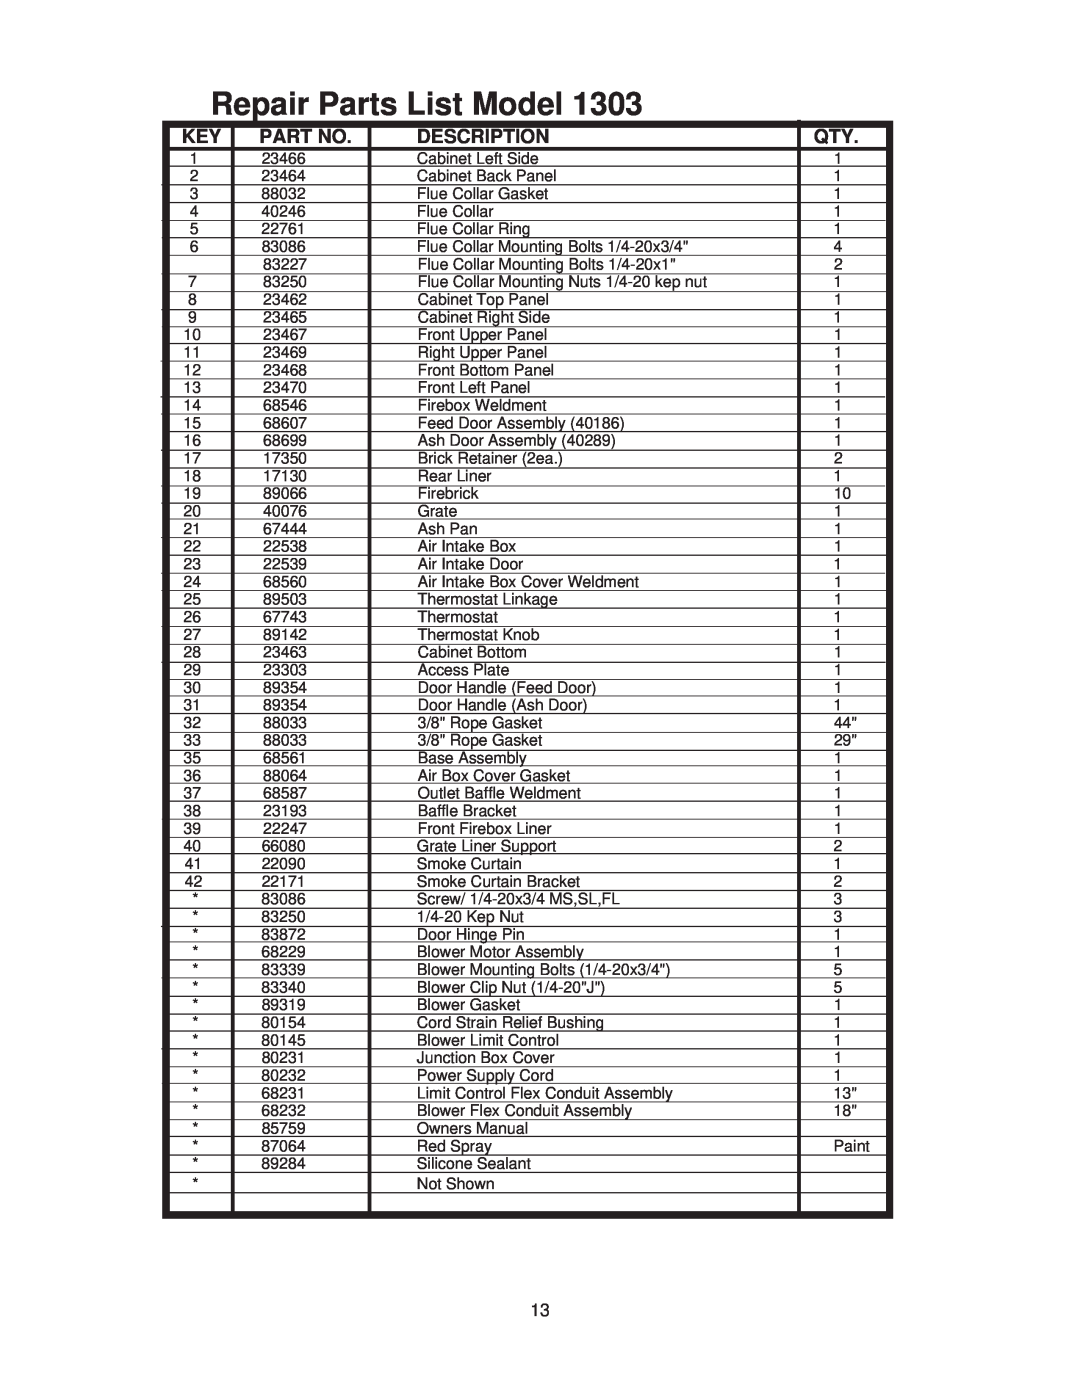 United States Stove AIR, 1303 warranty Repair Parts List Model, Description 